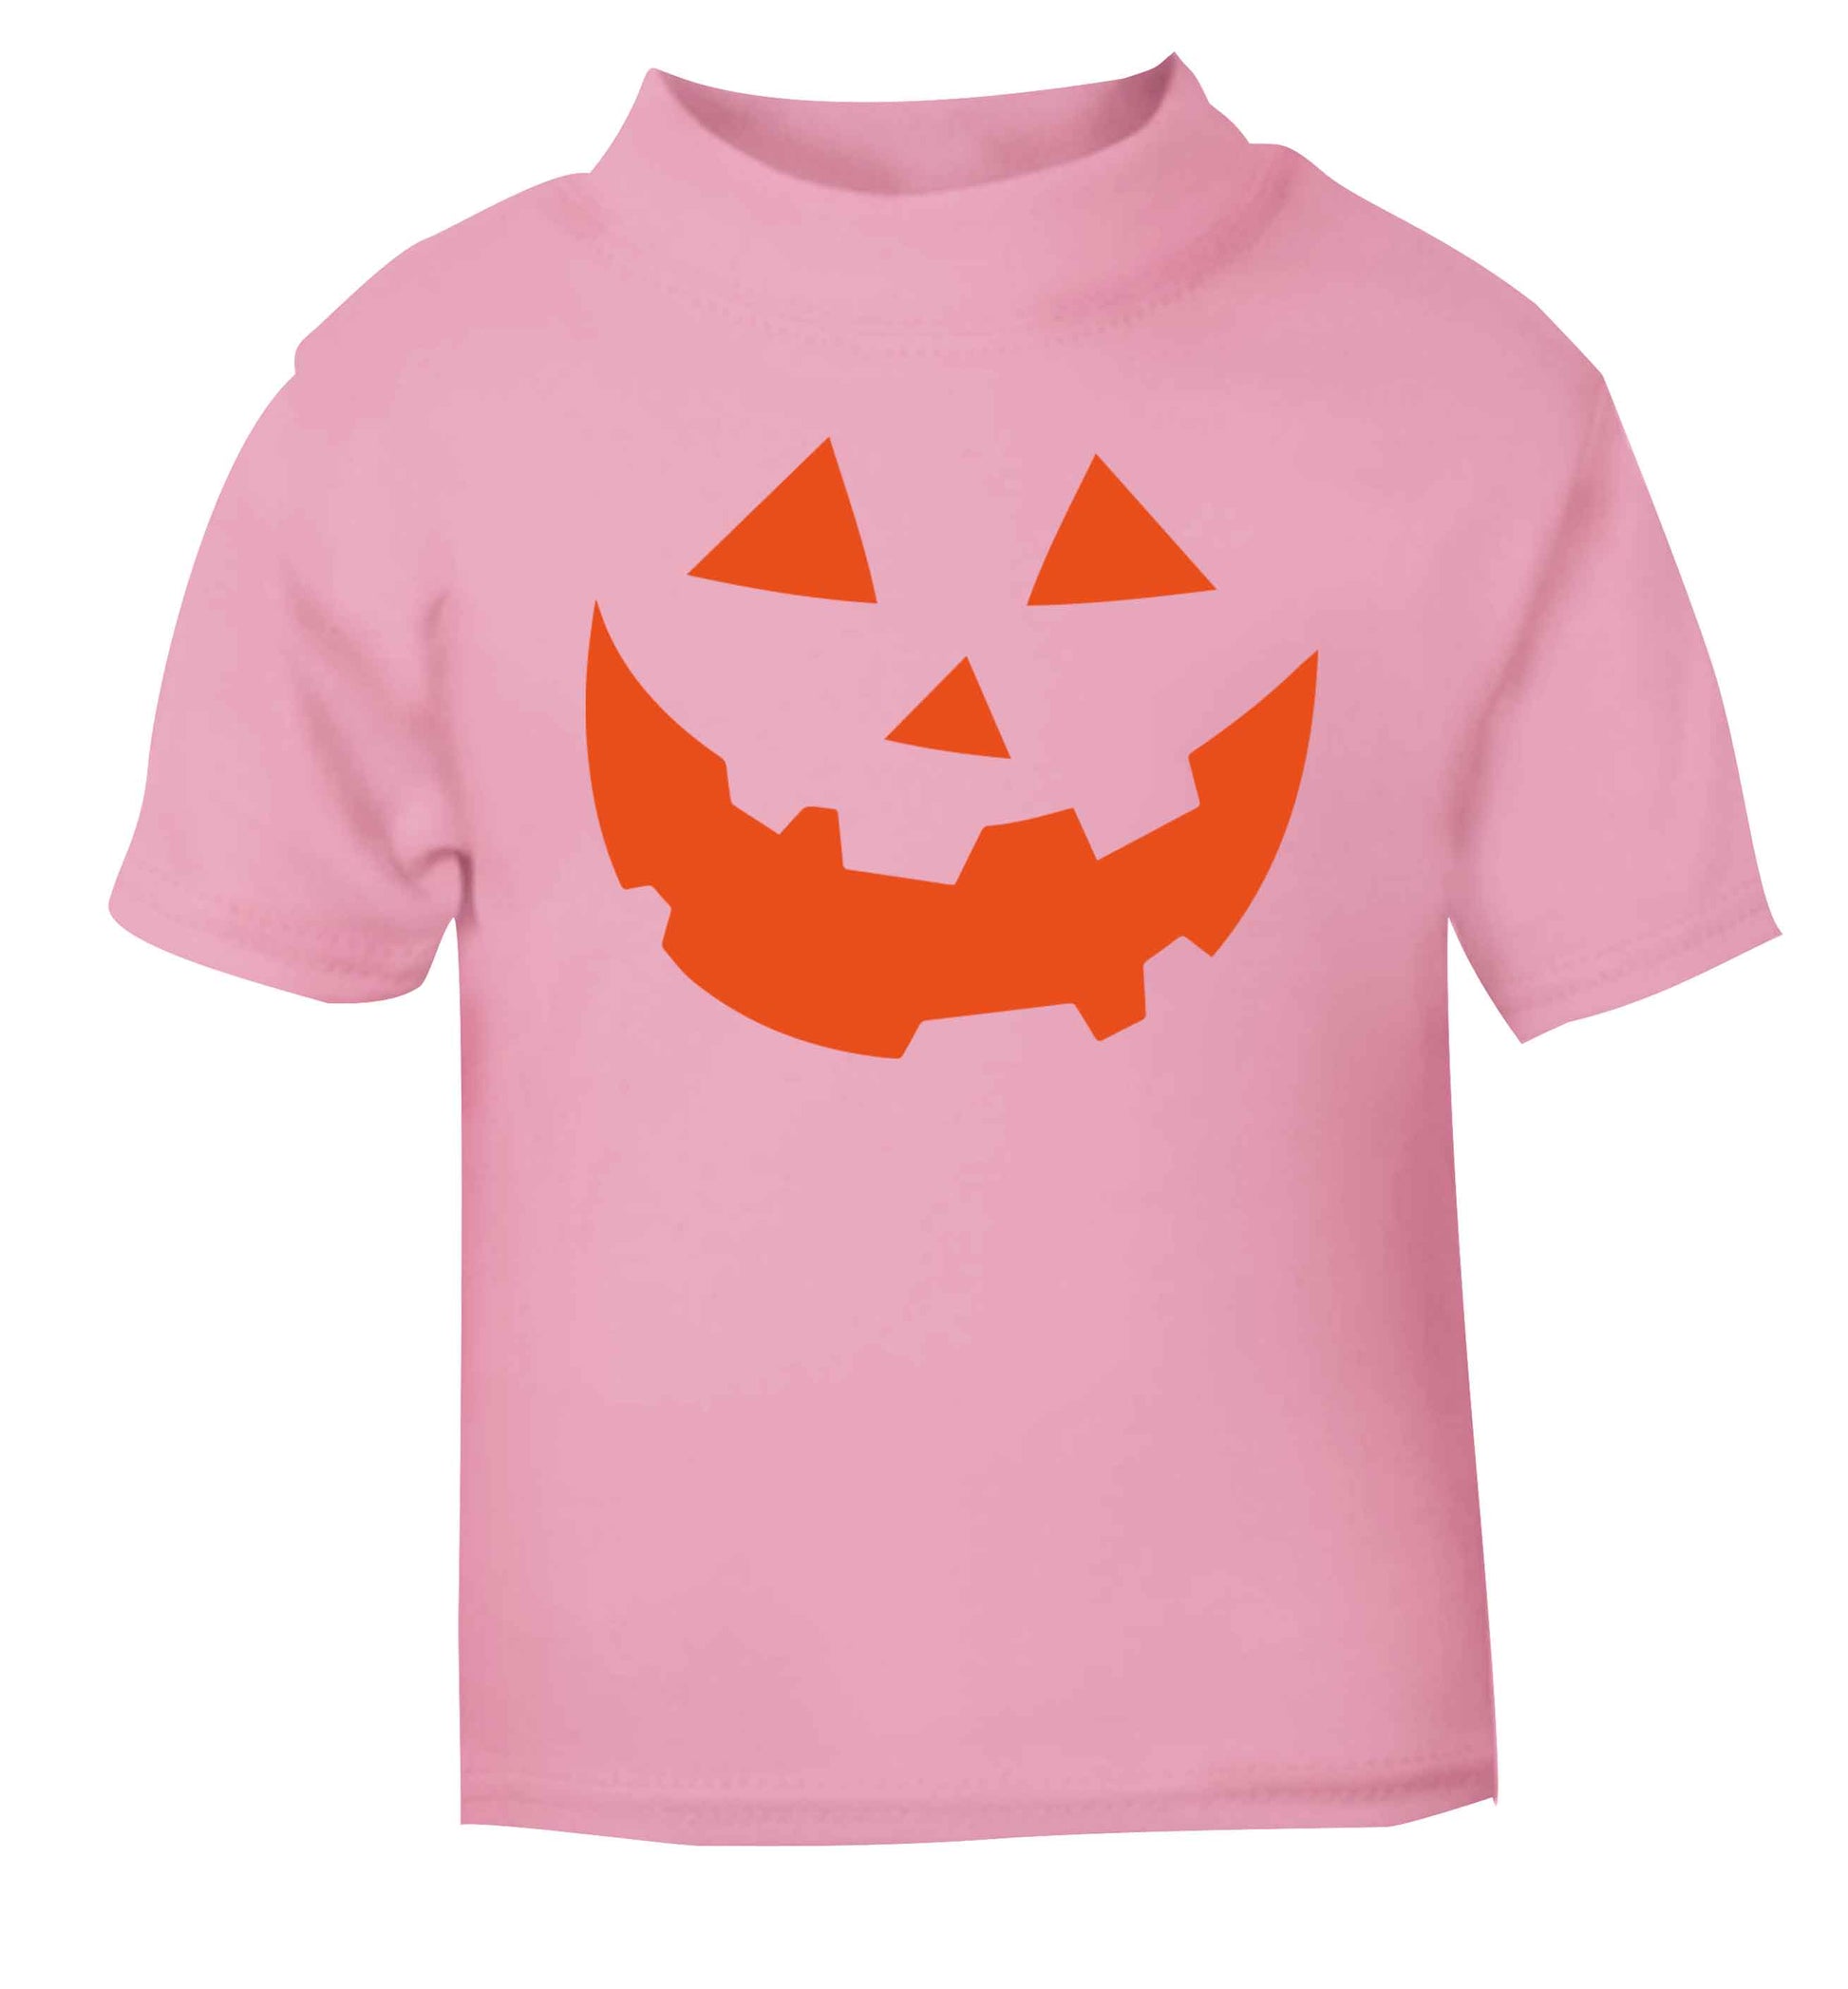 Pumpkin Spice Nice light pink baby toddler Tshirt 2 Years